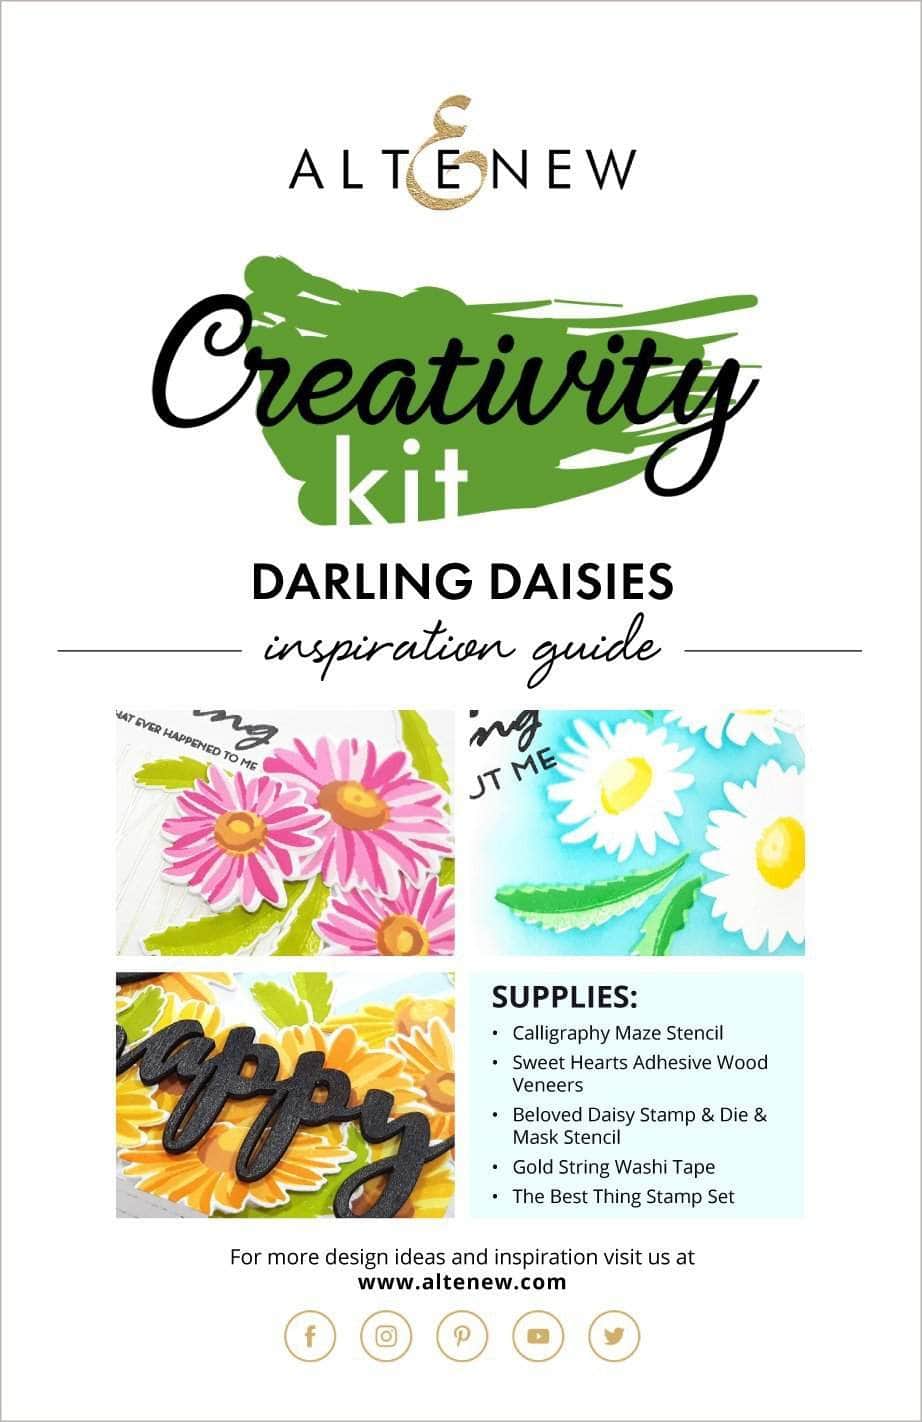 55Printing.com Printed Media Darling Daisies Creativity Kit Inspiration Guide